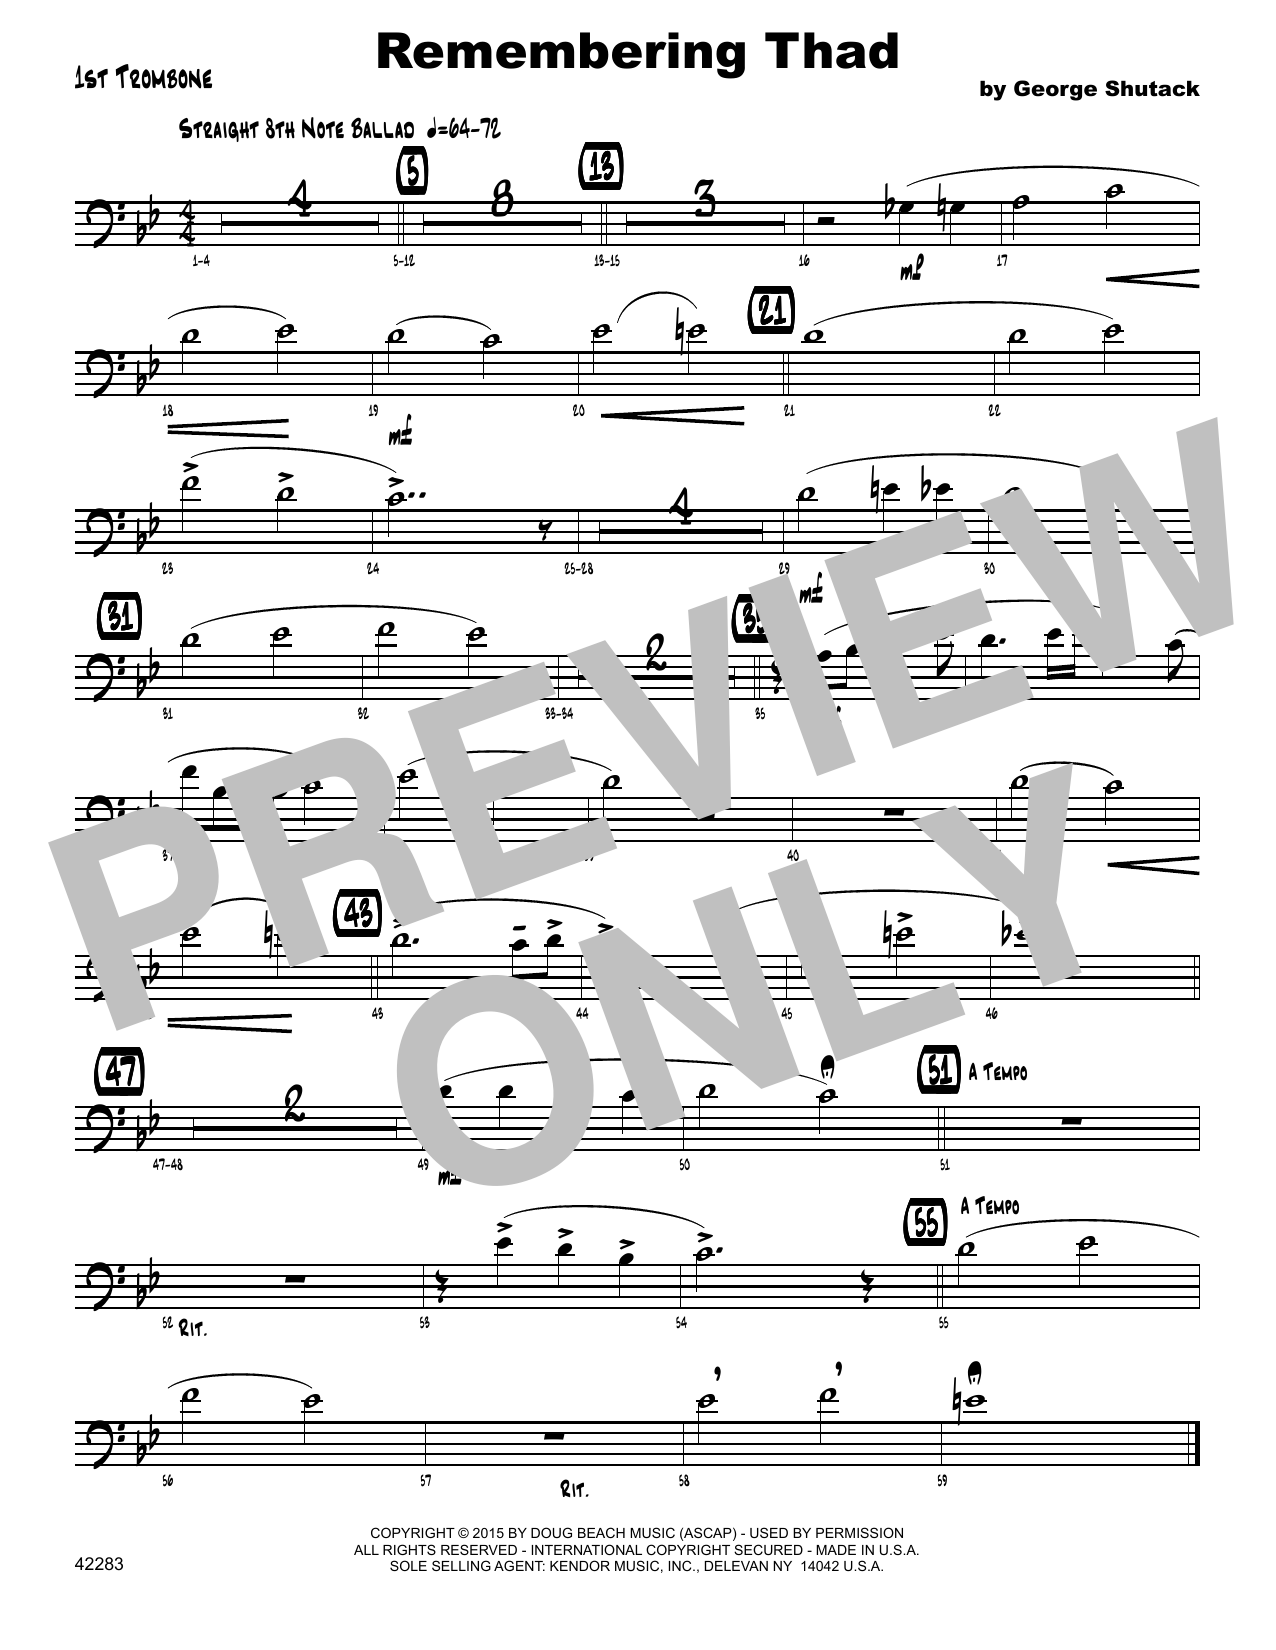 Download George Shutack Remembering Thad - 1st Trombone Sheet Music